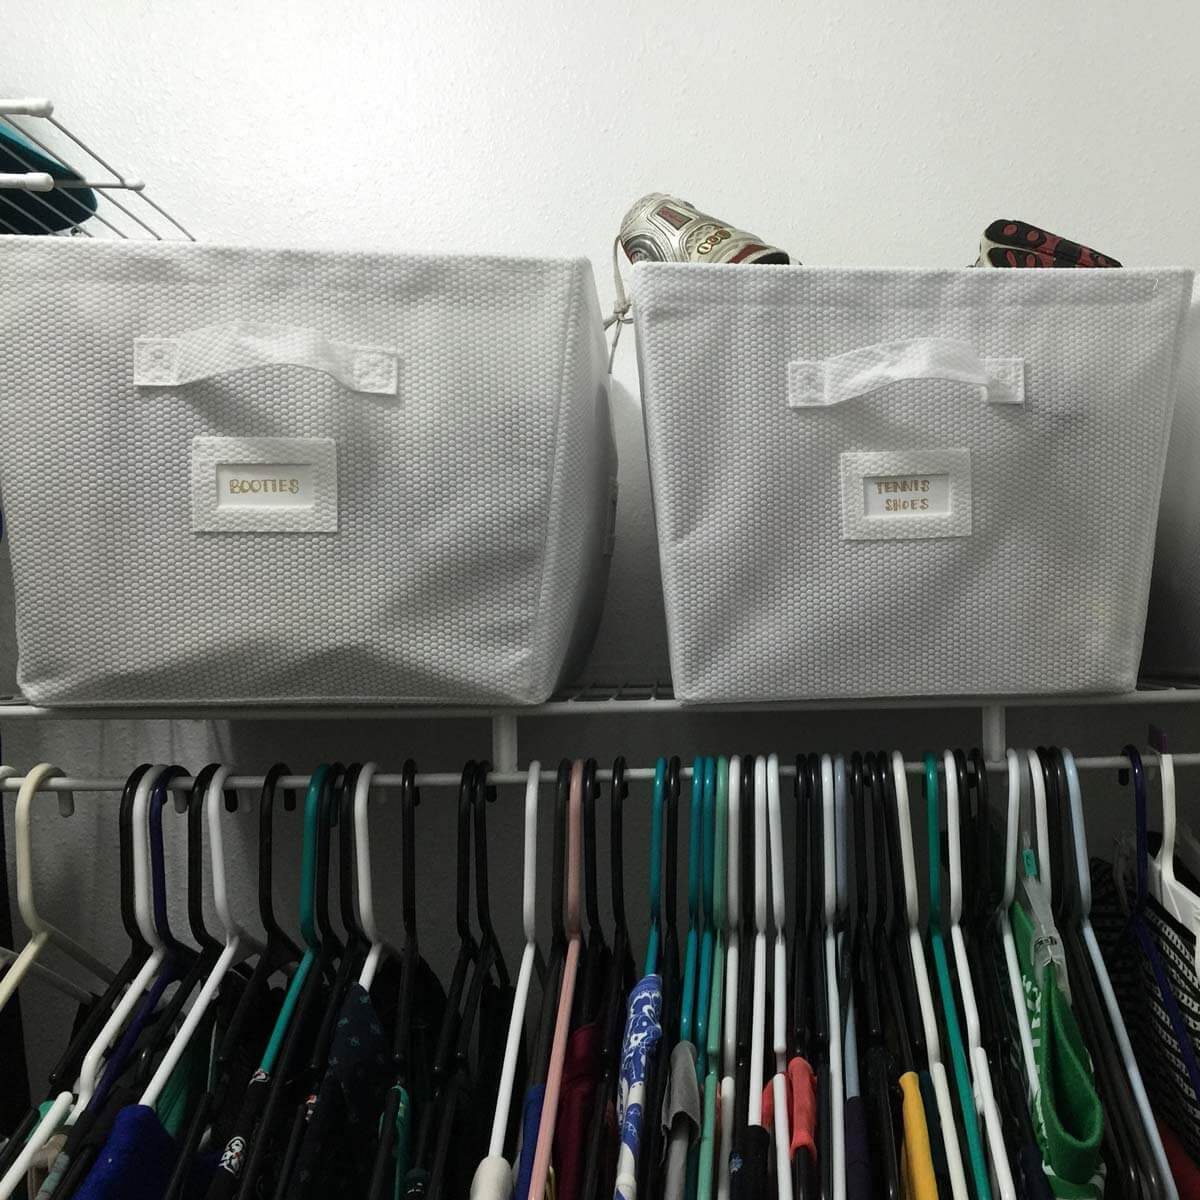 bins labeled closet organization